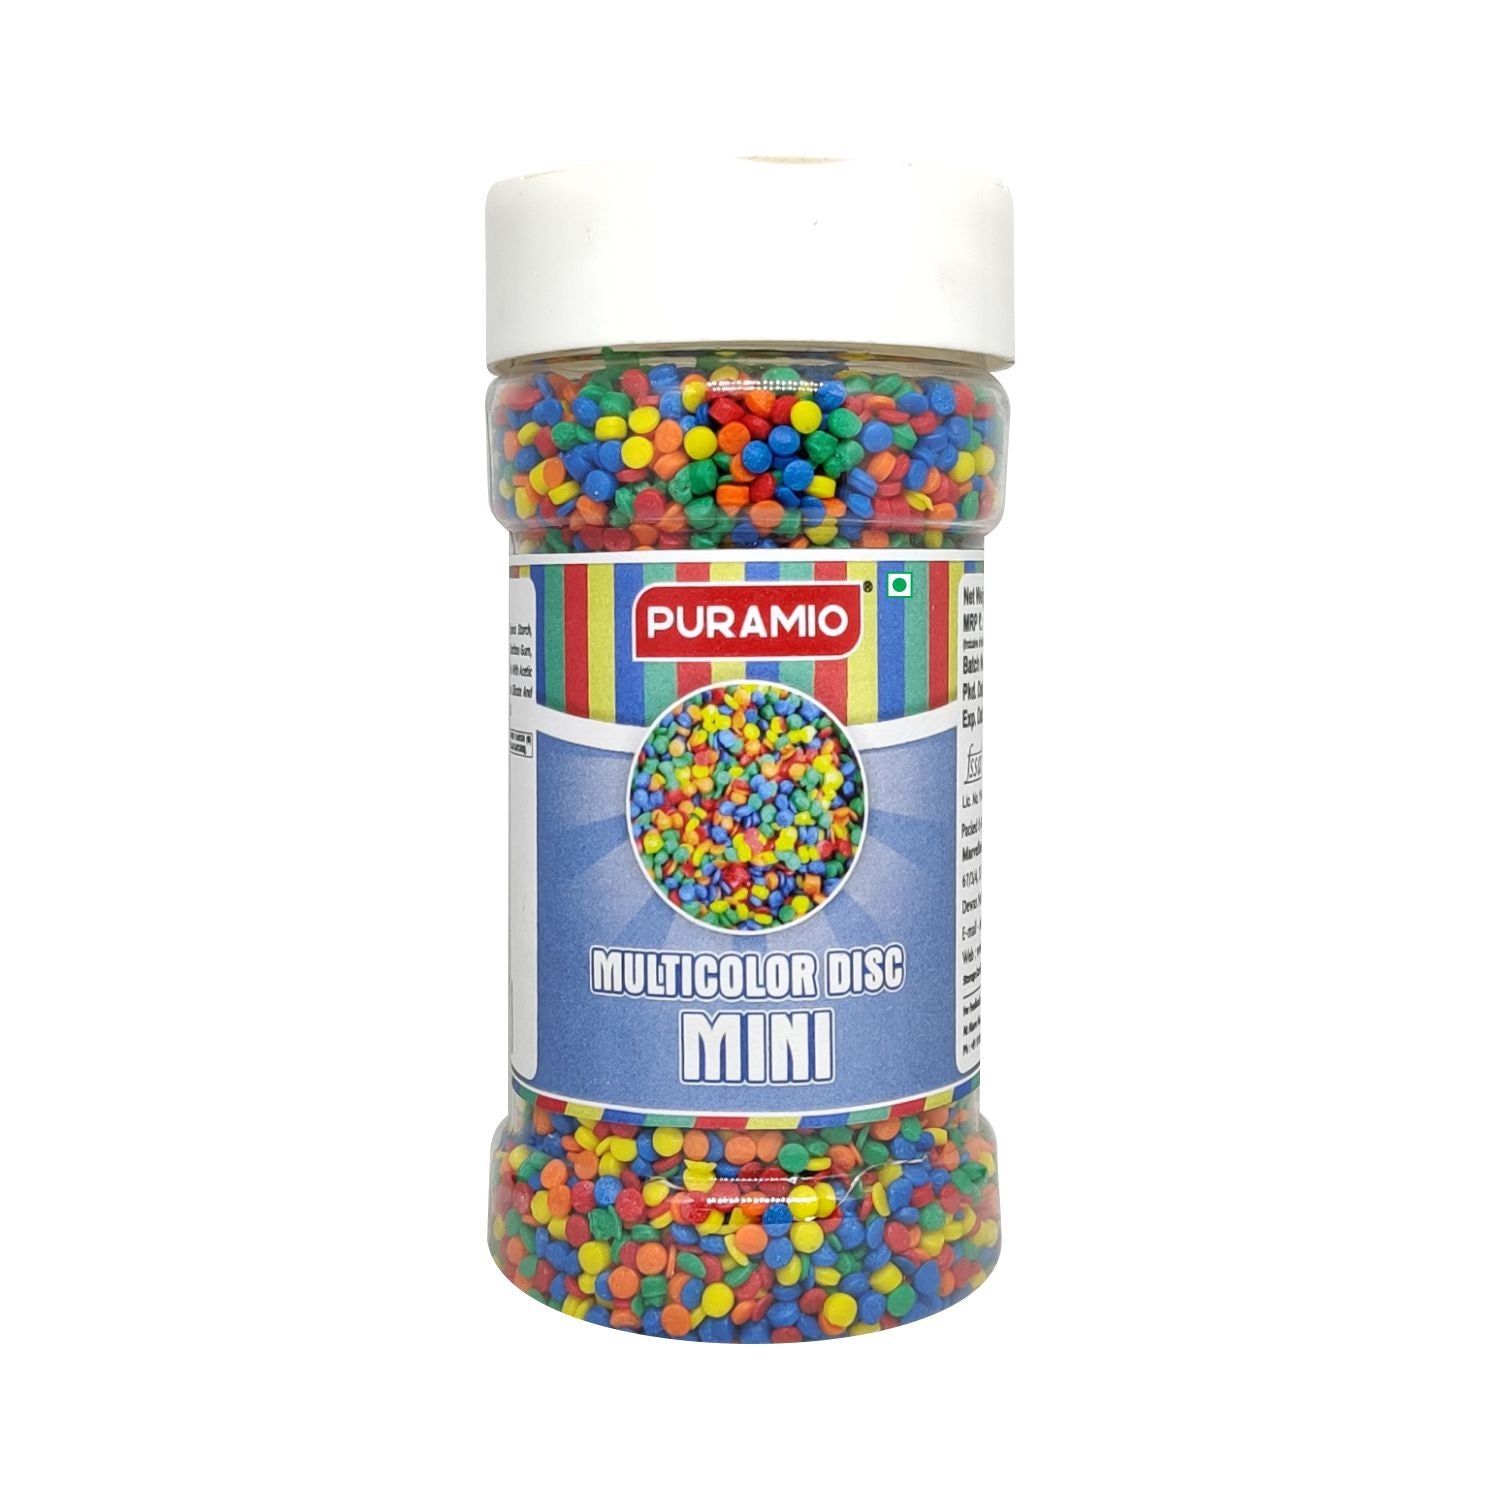 Puramio Multicolor Disc - Mini For Cake Decoration, 125 gm